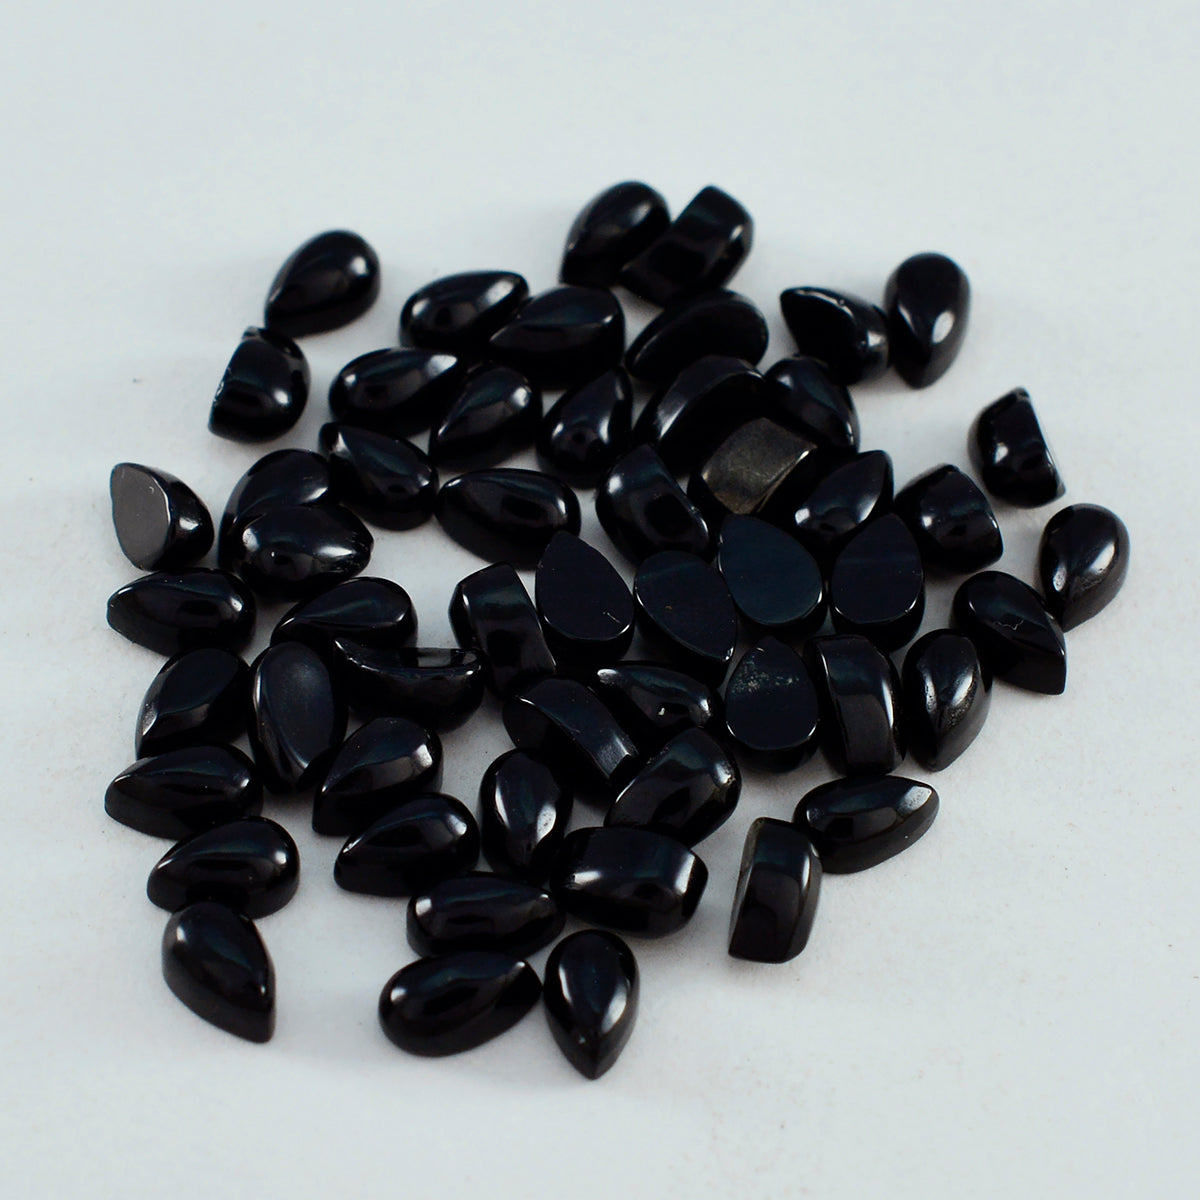 Riyogems 1PC Black Onyx Cabochon 3X5 mm Pear Shape sweet Quality Loose Gem